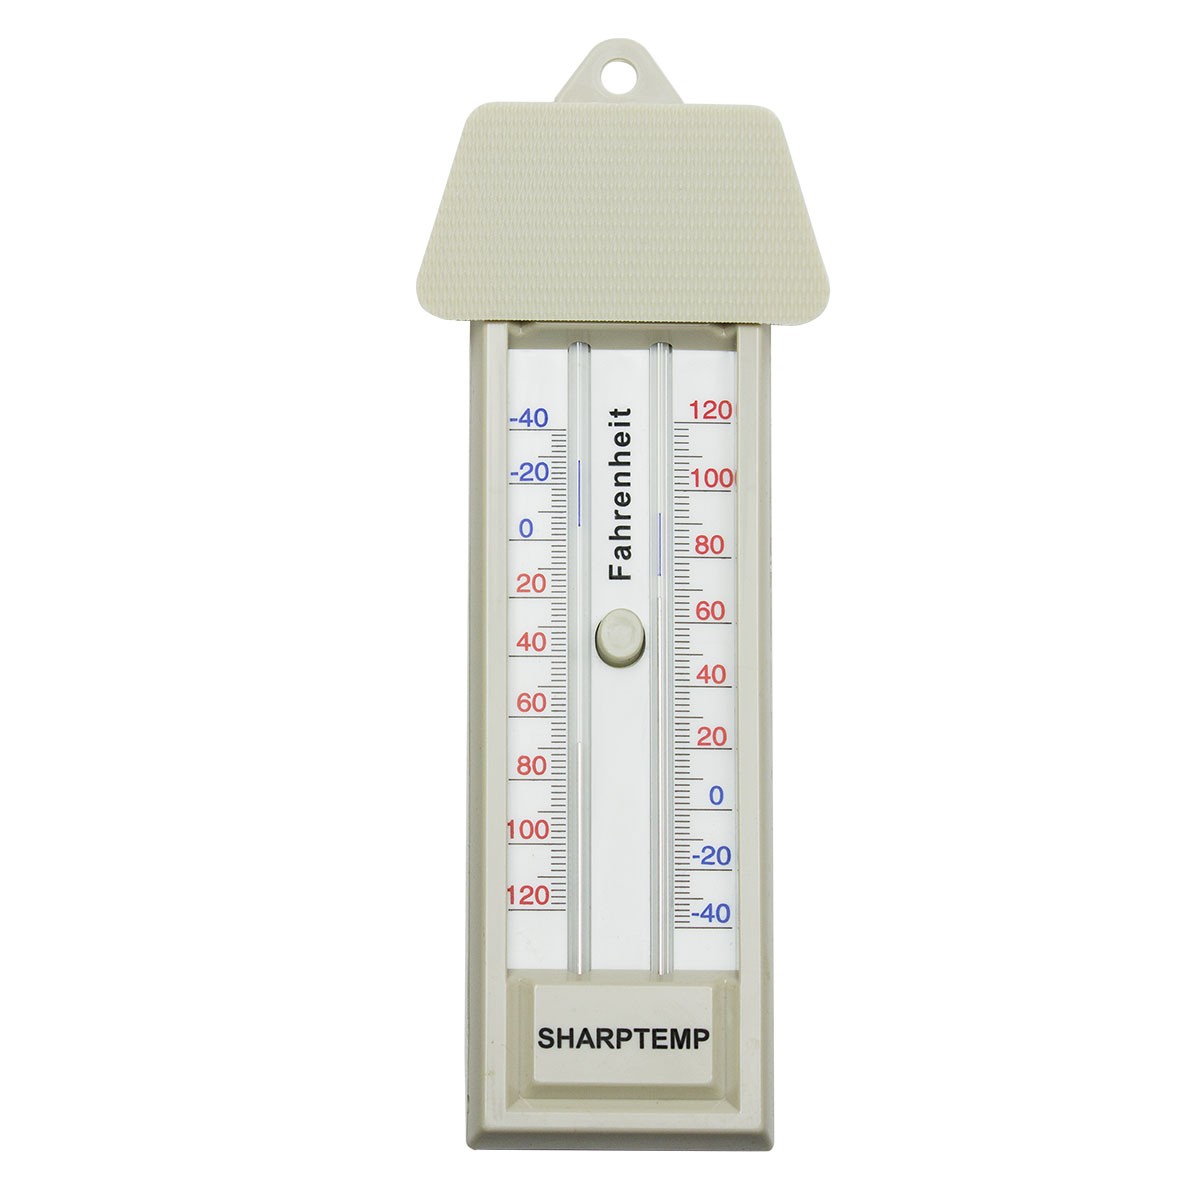 Min/Max Thermometer, Triple Display